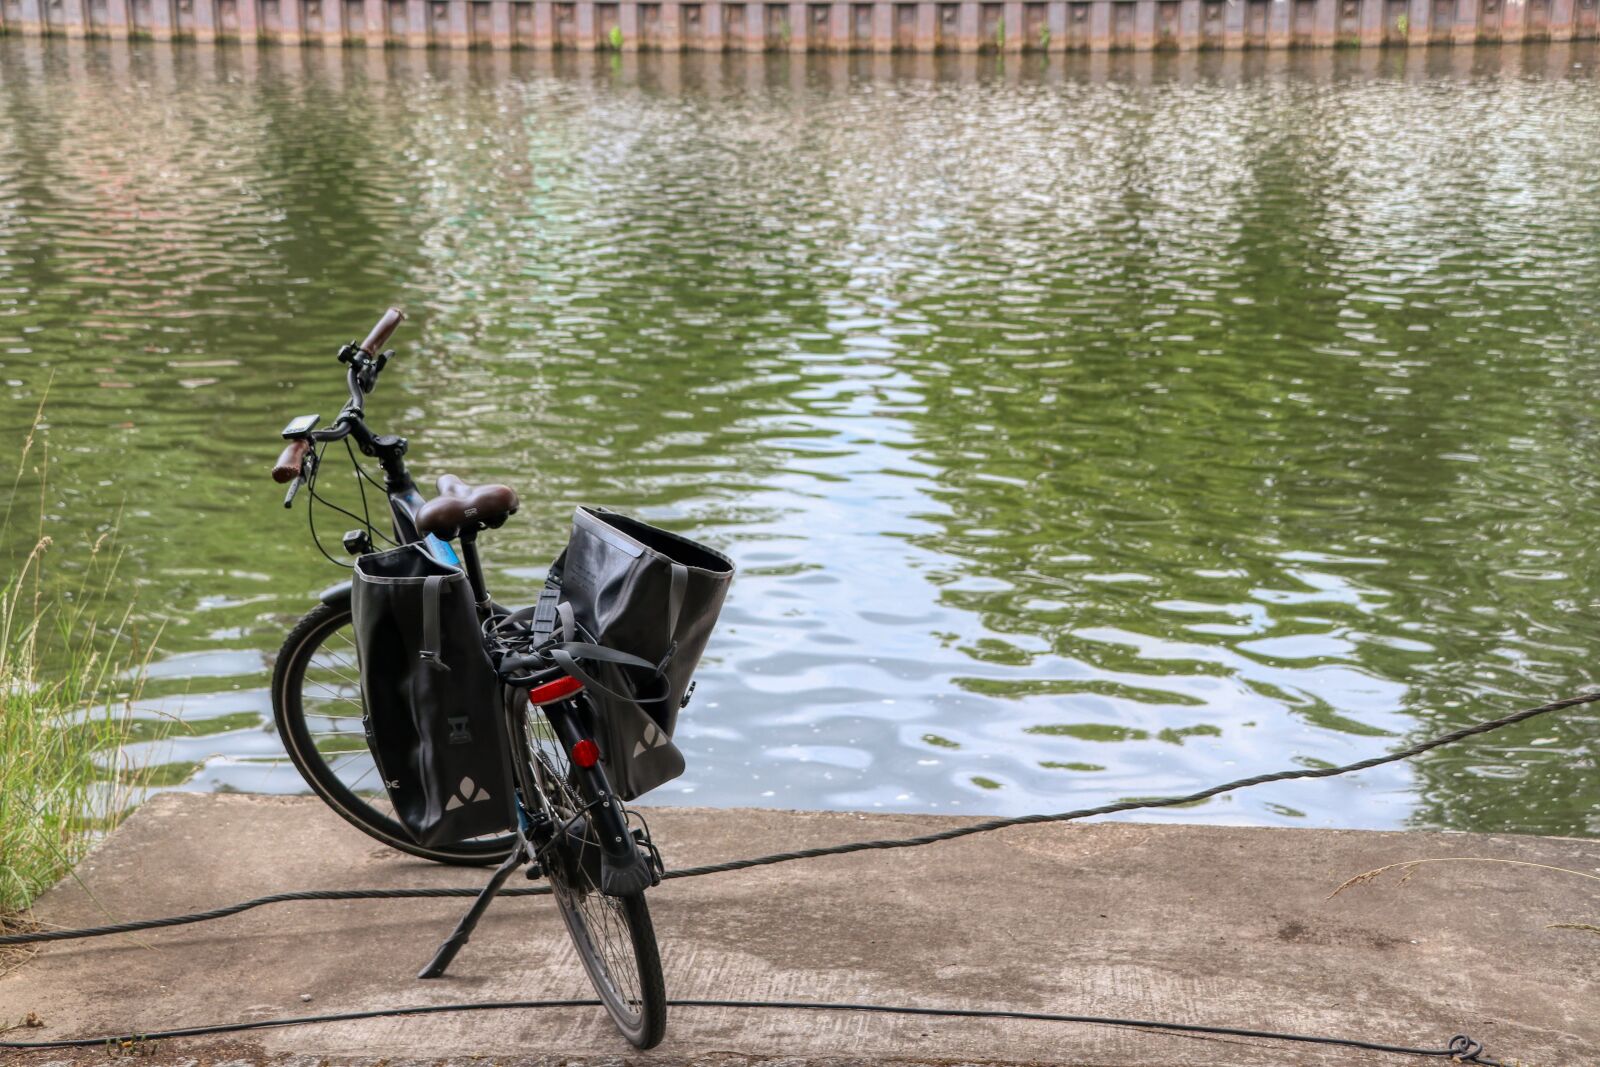 River bike. Велосипед из речки. Инсталляция велосипеды на Пскове реке. Велосипед у реки. Rekam велосипеды.